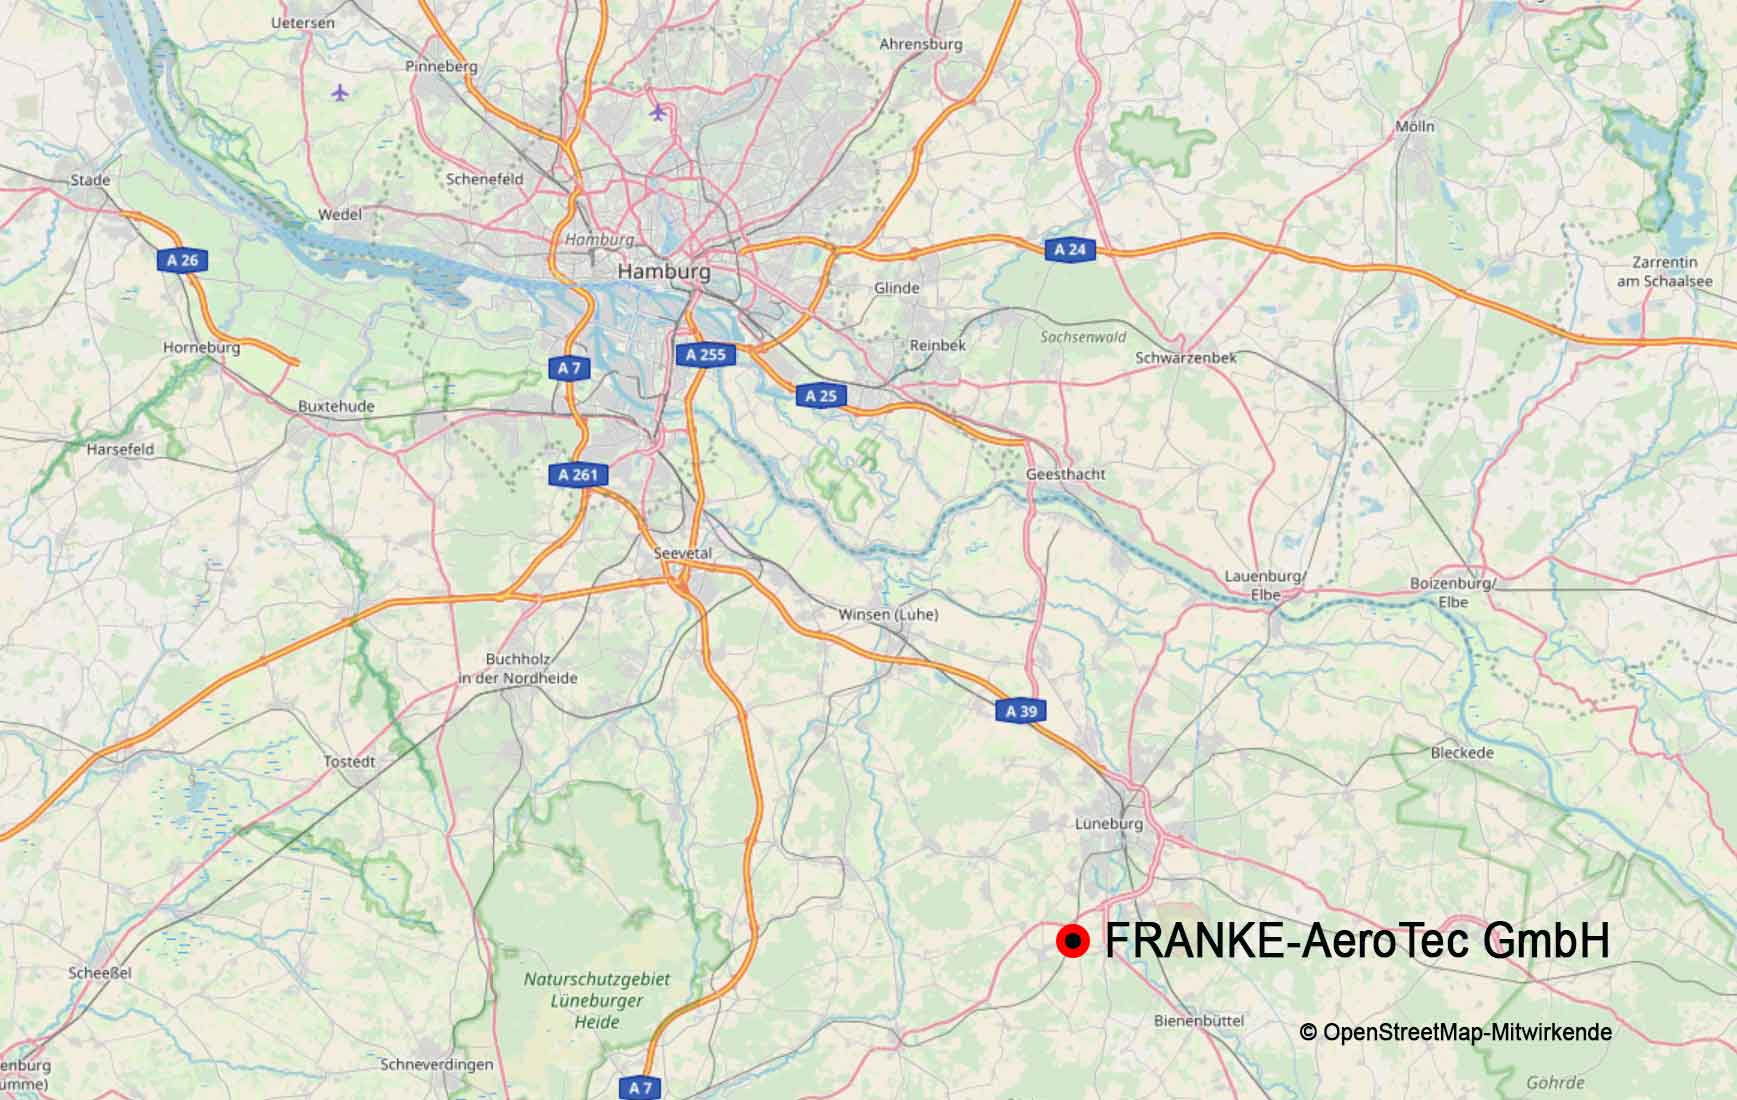 OpenStreetMap-Standort-Franke-Aerotec